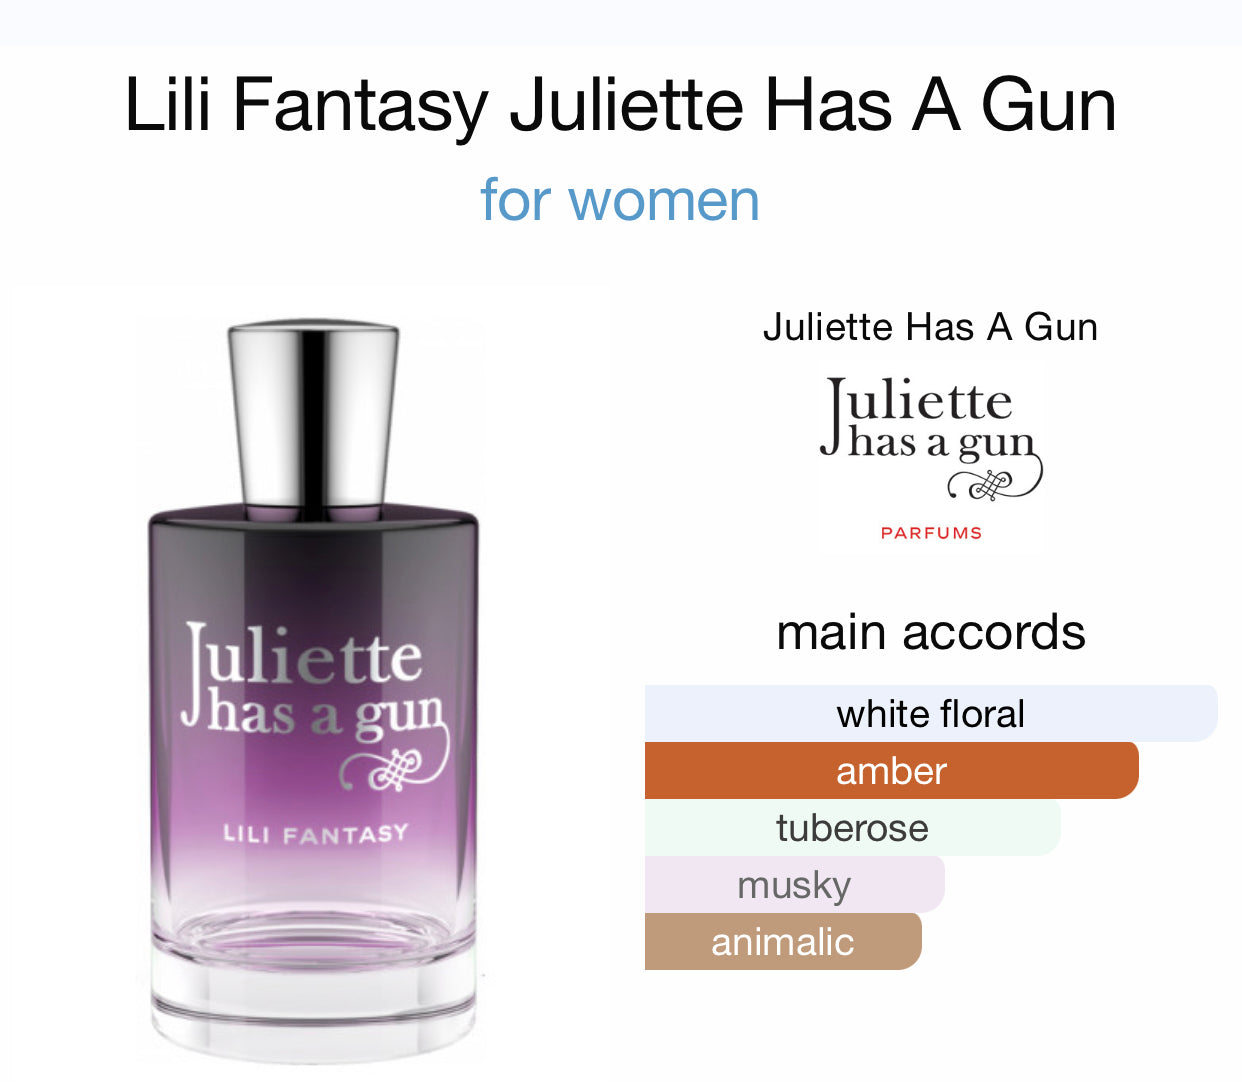 Inspired by Lili Fantasy Eau De Parfum from Juliette Has A Gun